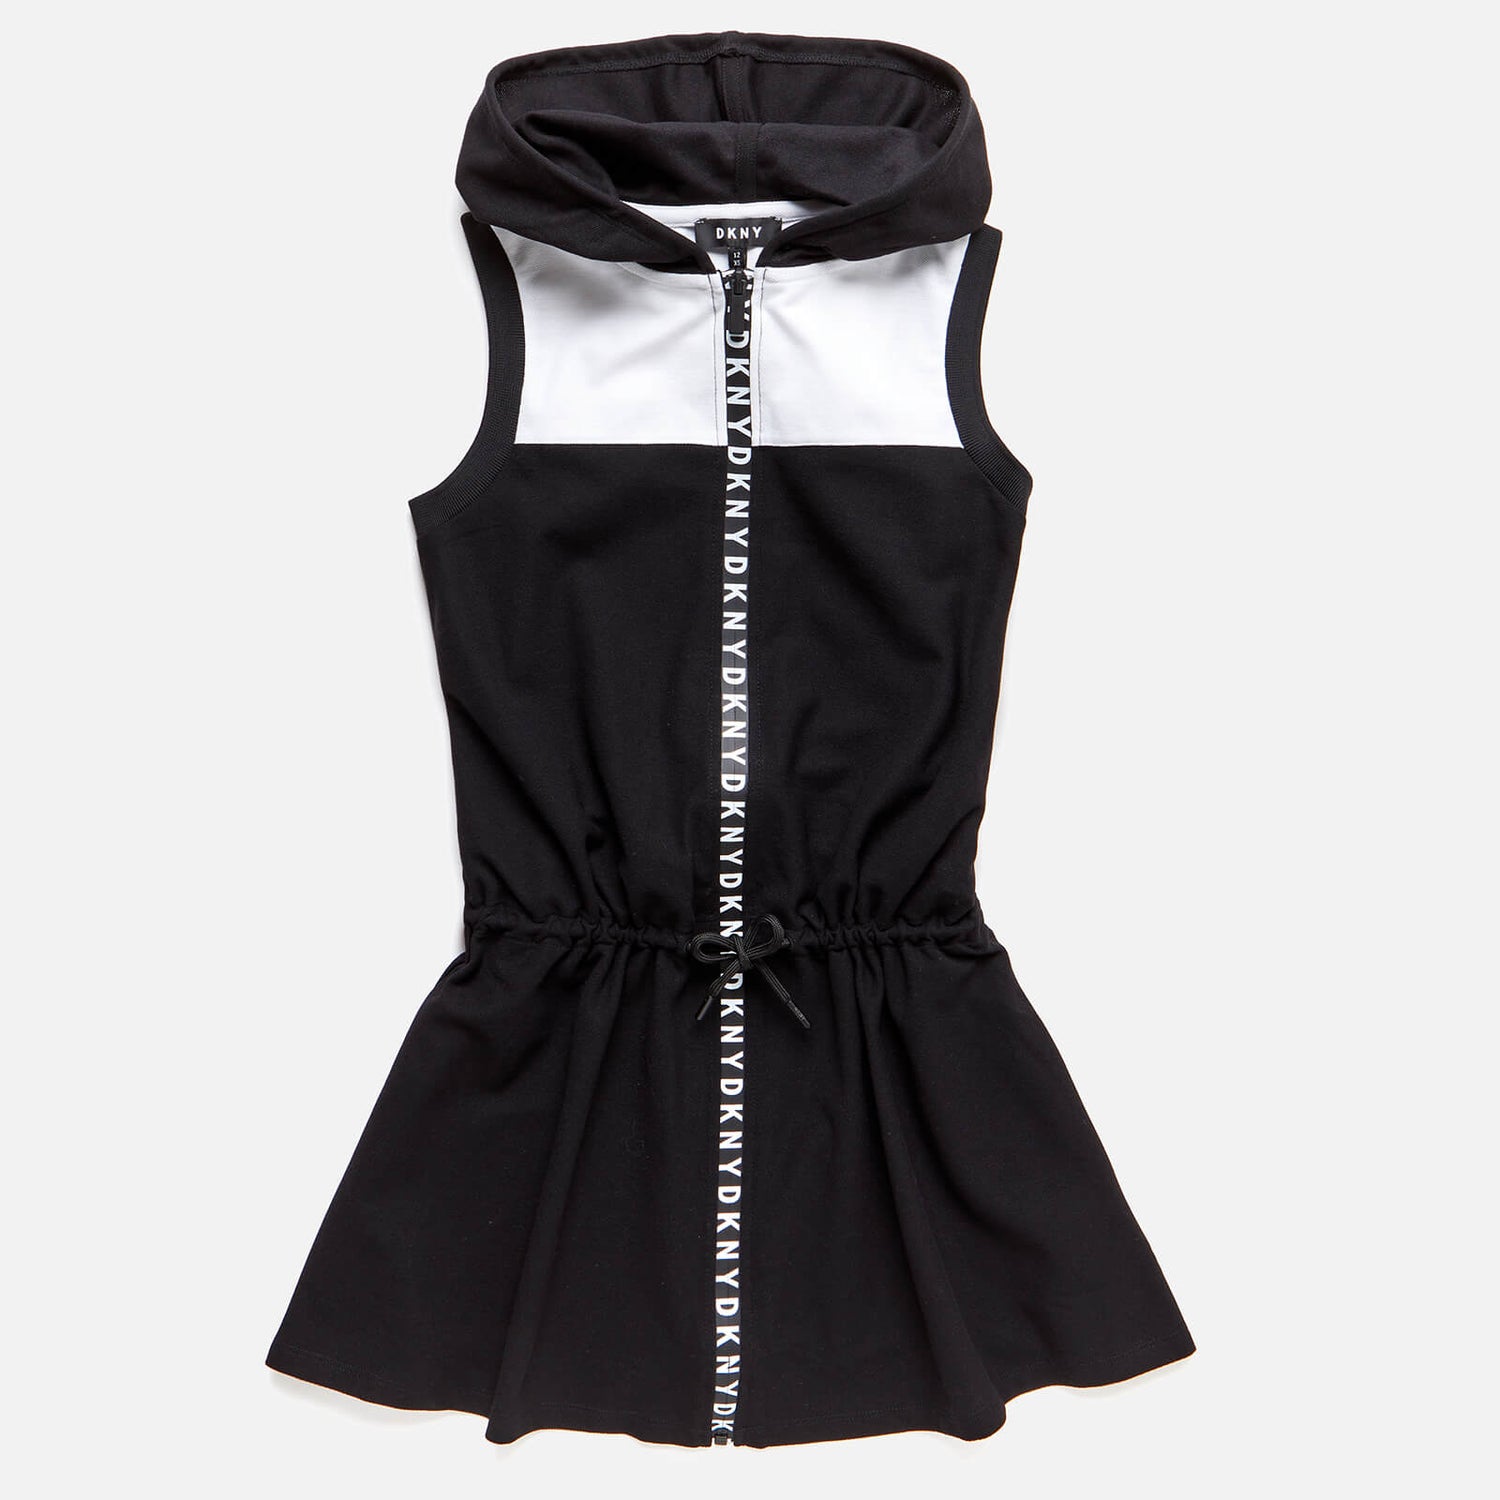 DKNY Girls' Hooded Zip Dress - Black